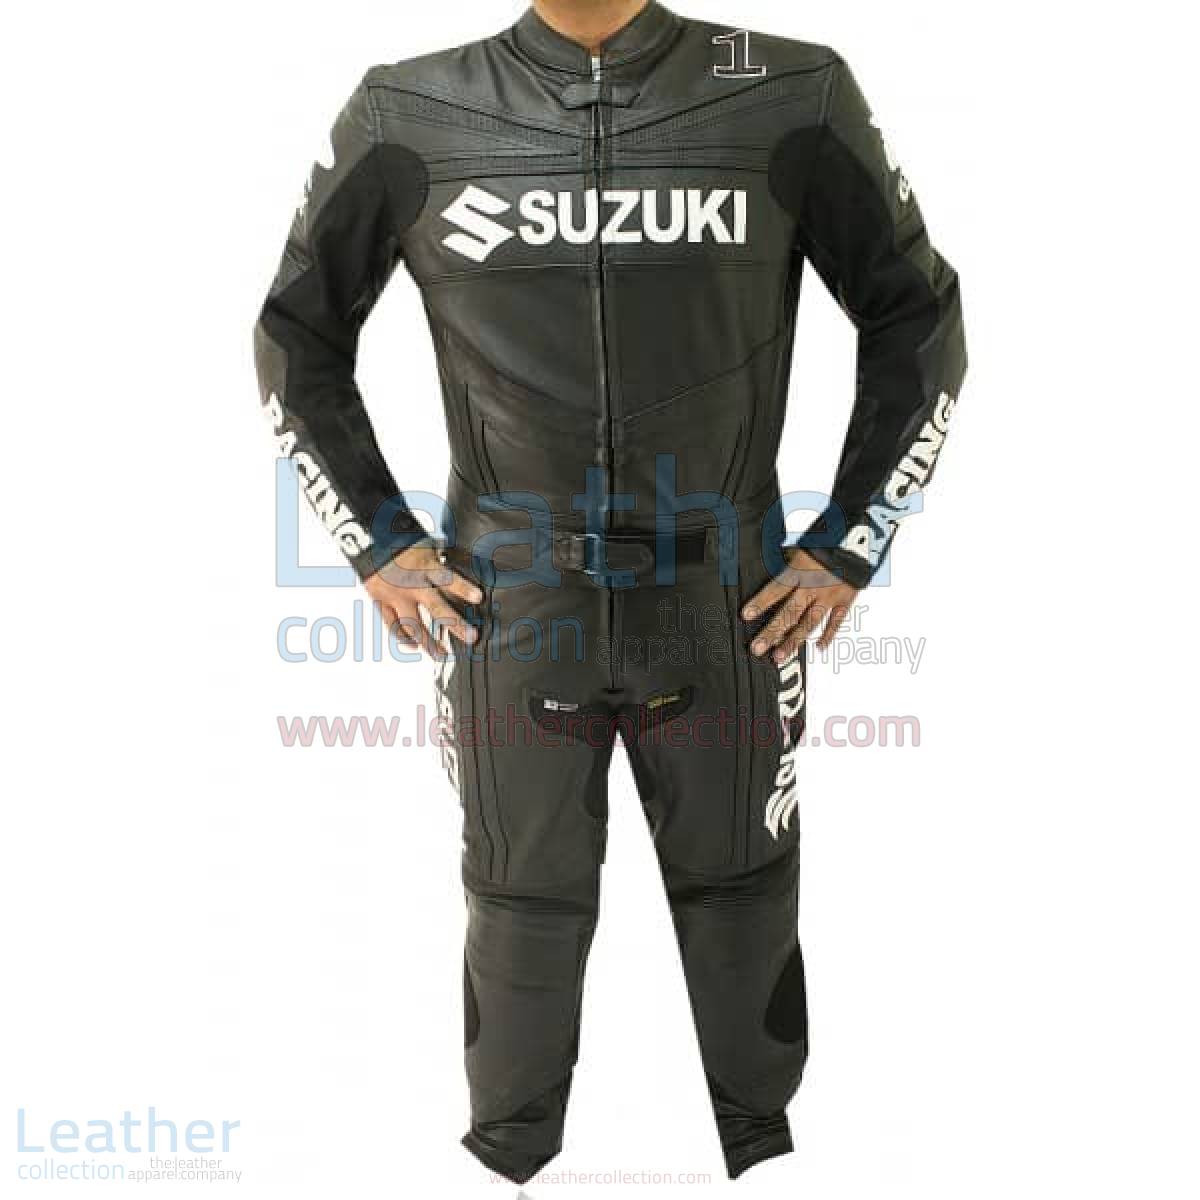 Suzuki Leather Racing Suit